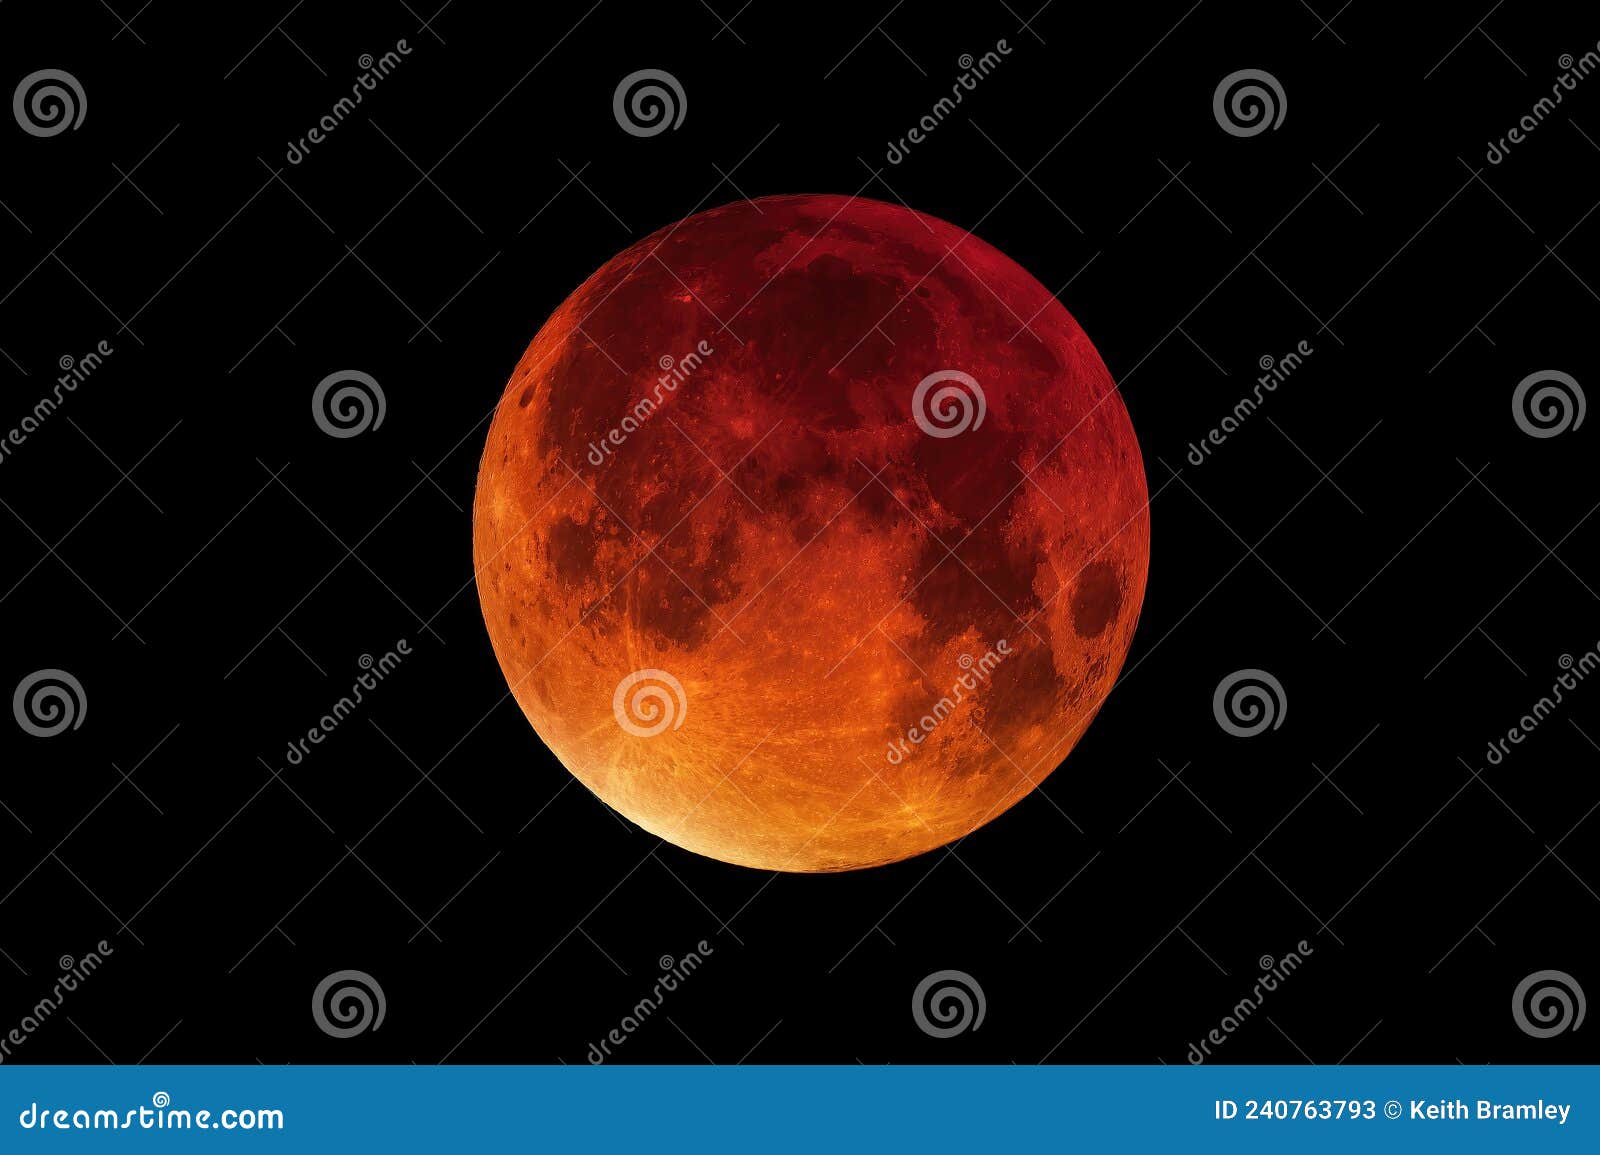 super blood moon - total lunar eclipse